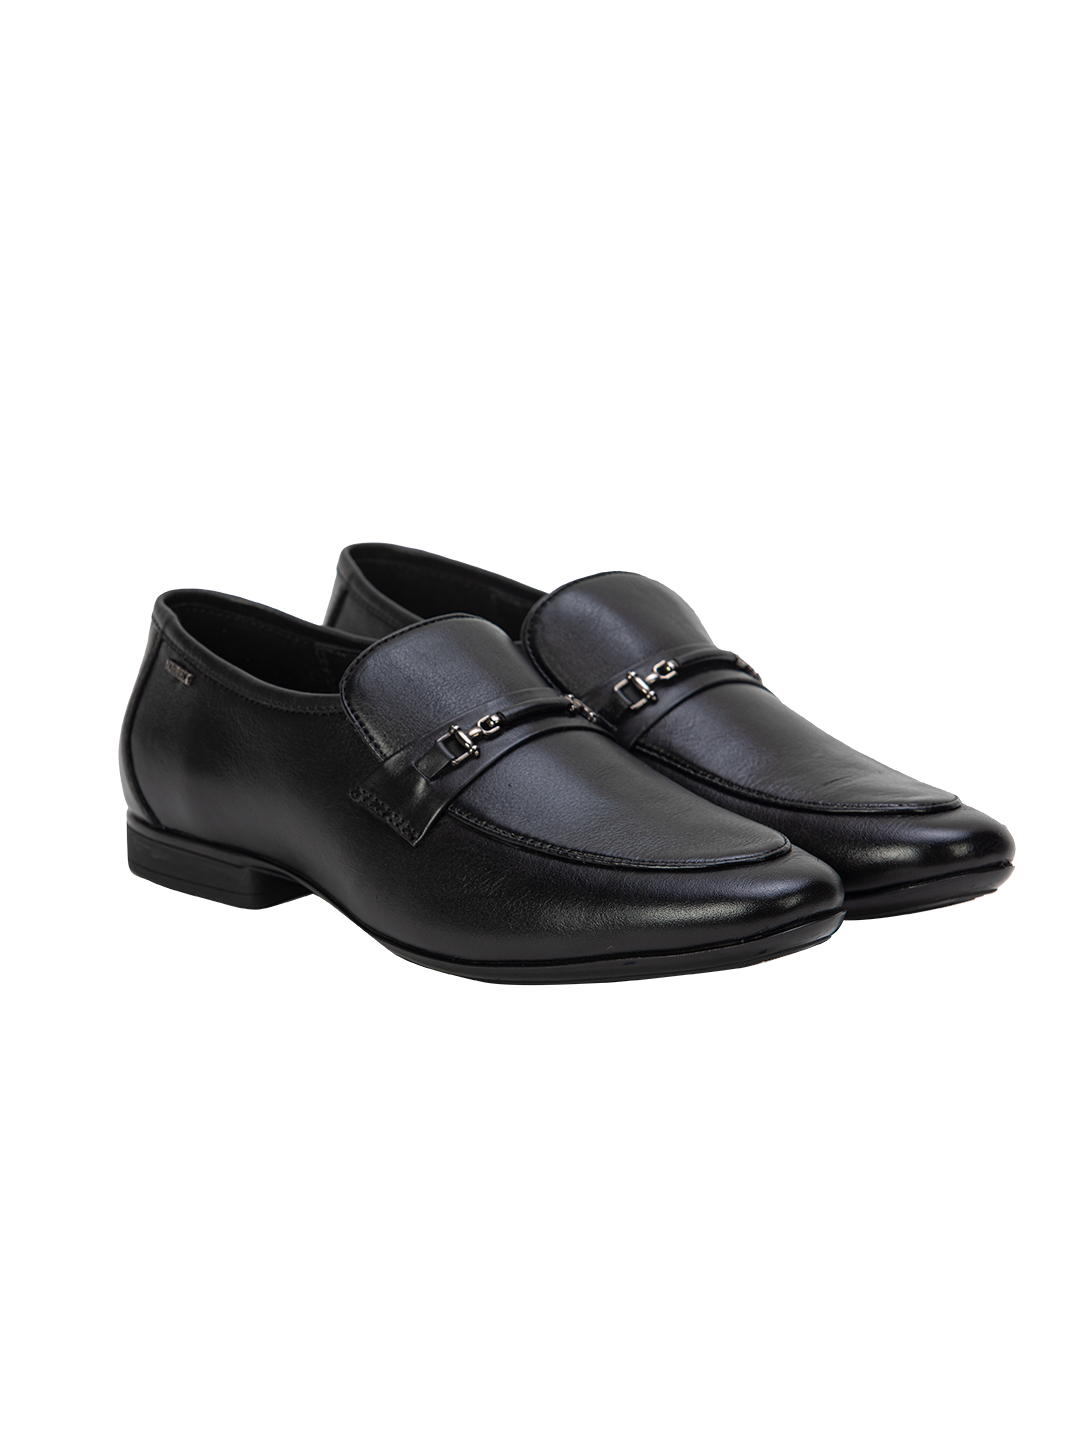 Buy Von Wellx Germany Comfort Black Glib Shoes Online in Lucknow